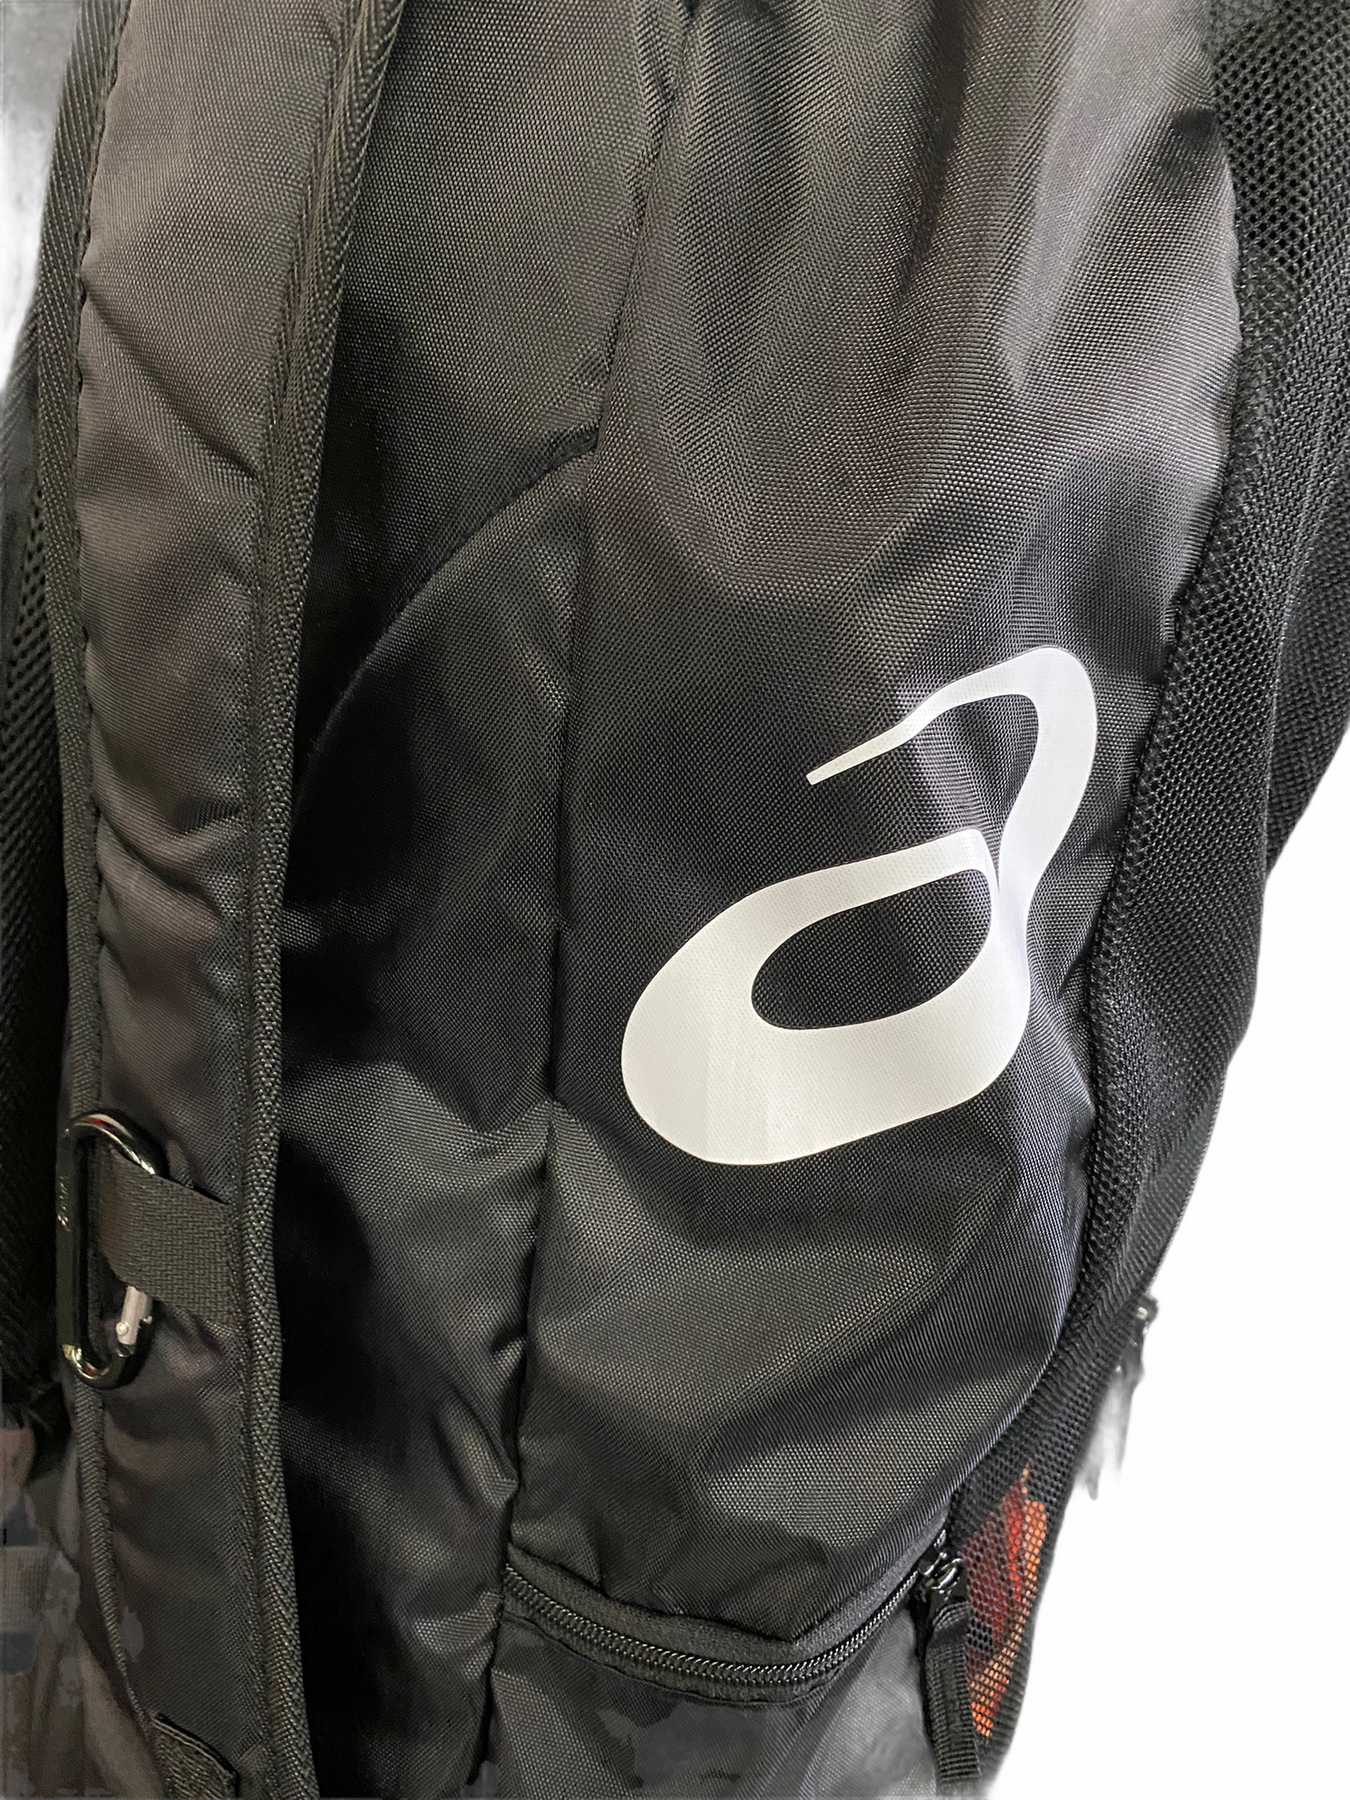 Asics Wrestling Bag Product Review - Gear & Backpacks